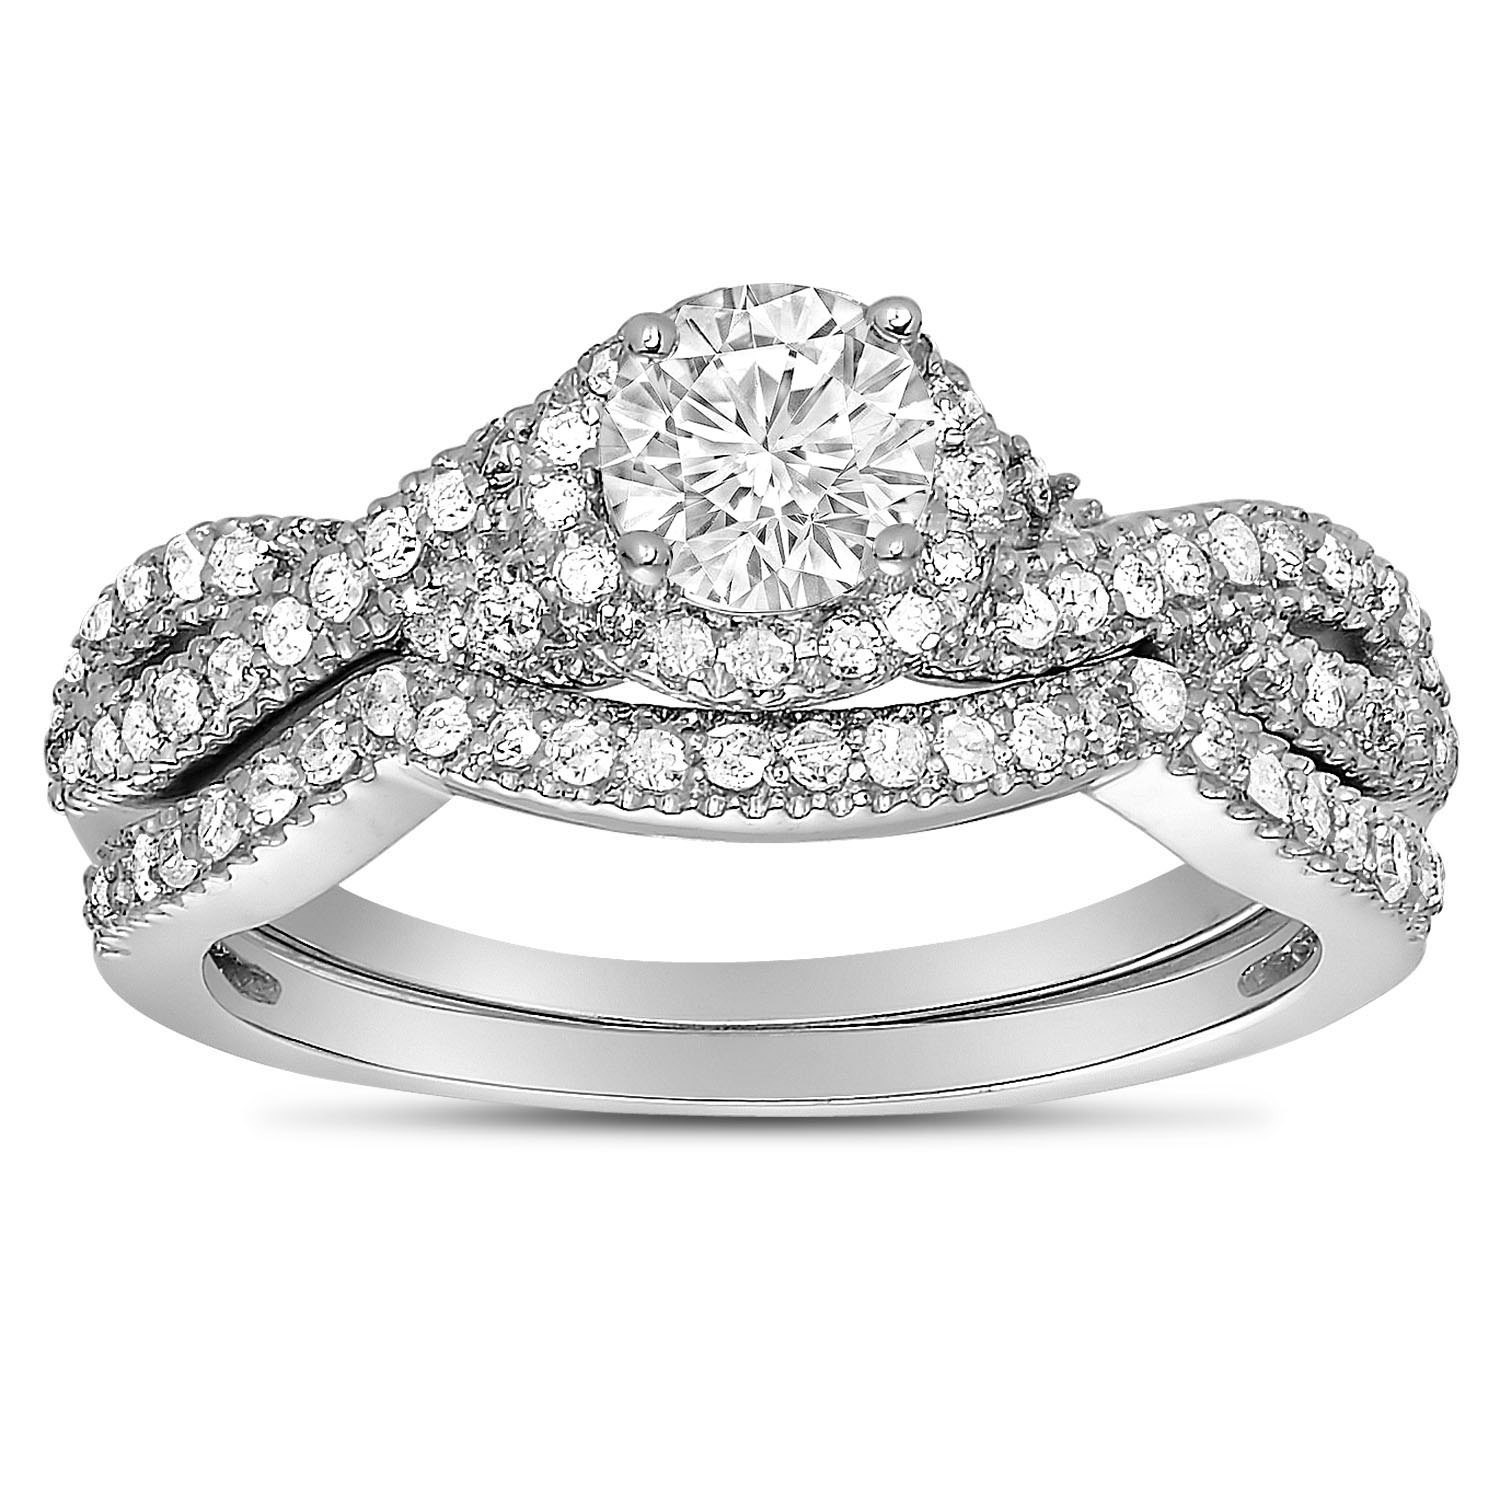 Infinity Wedding Band Sets
 2 Carat Round Diamond Infinity Wedding Ring Set in White